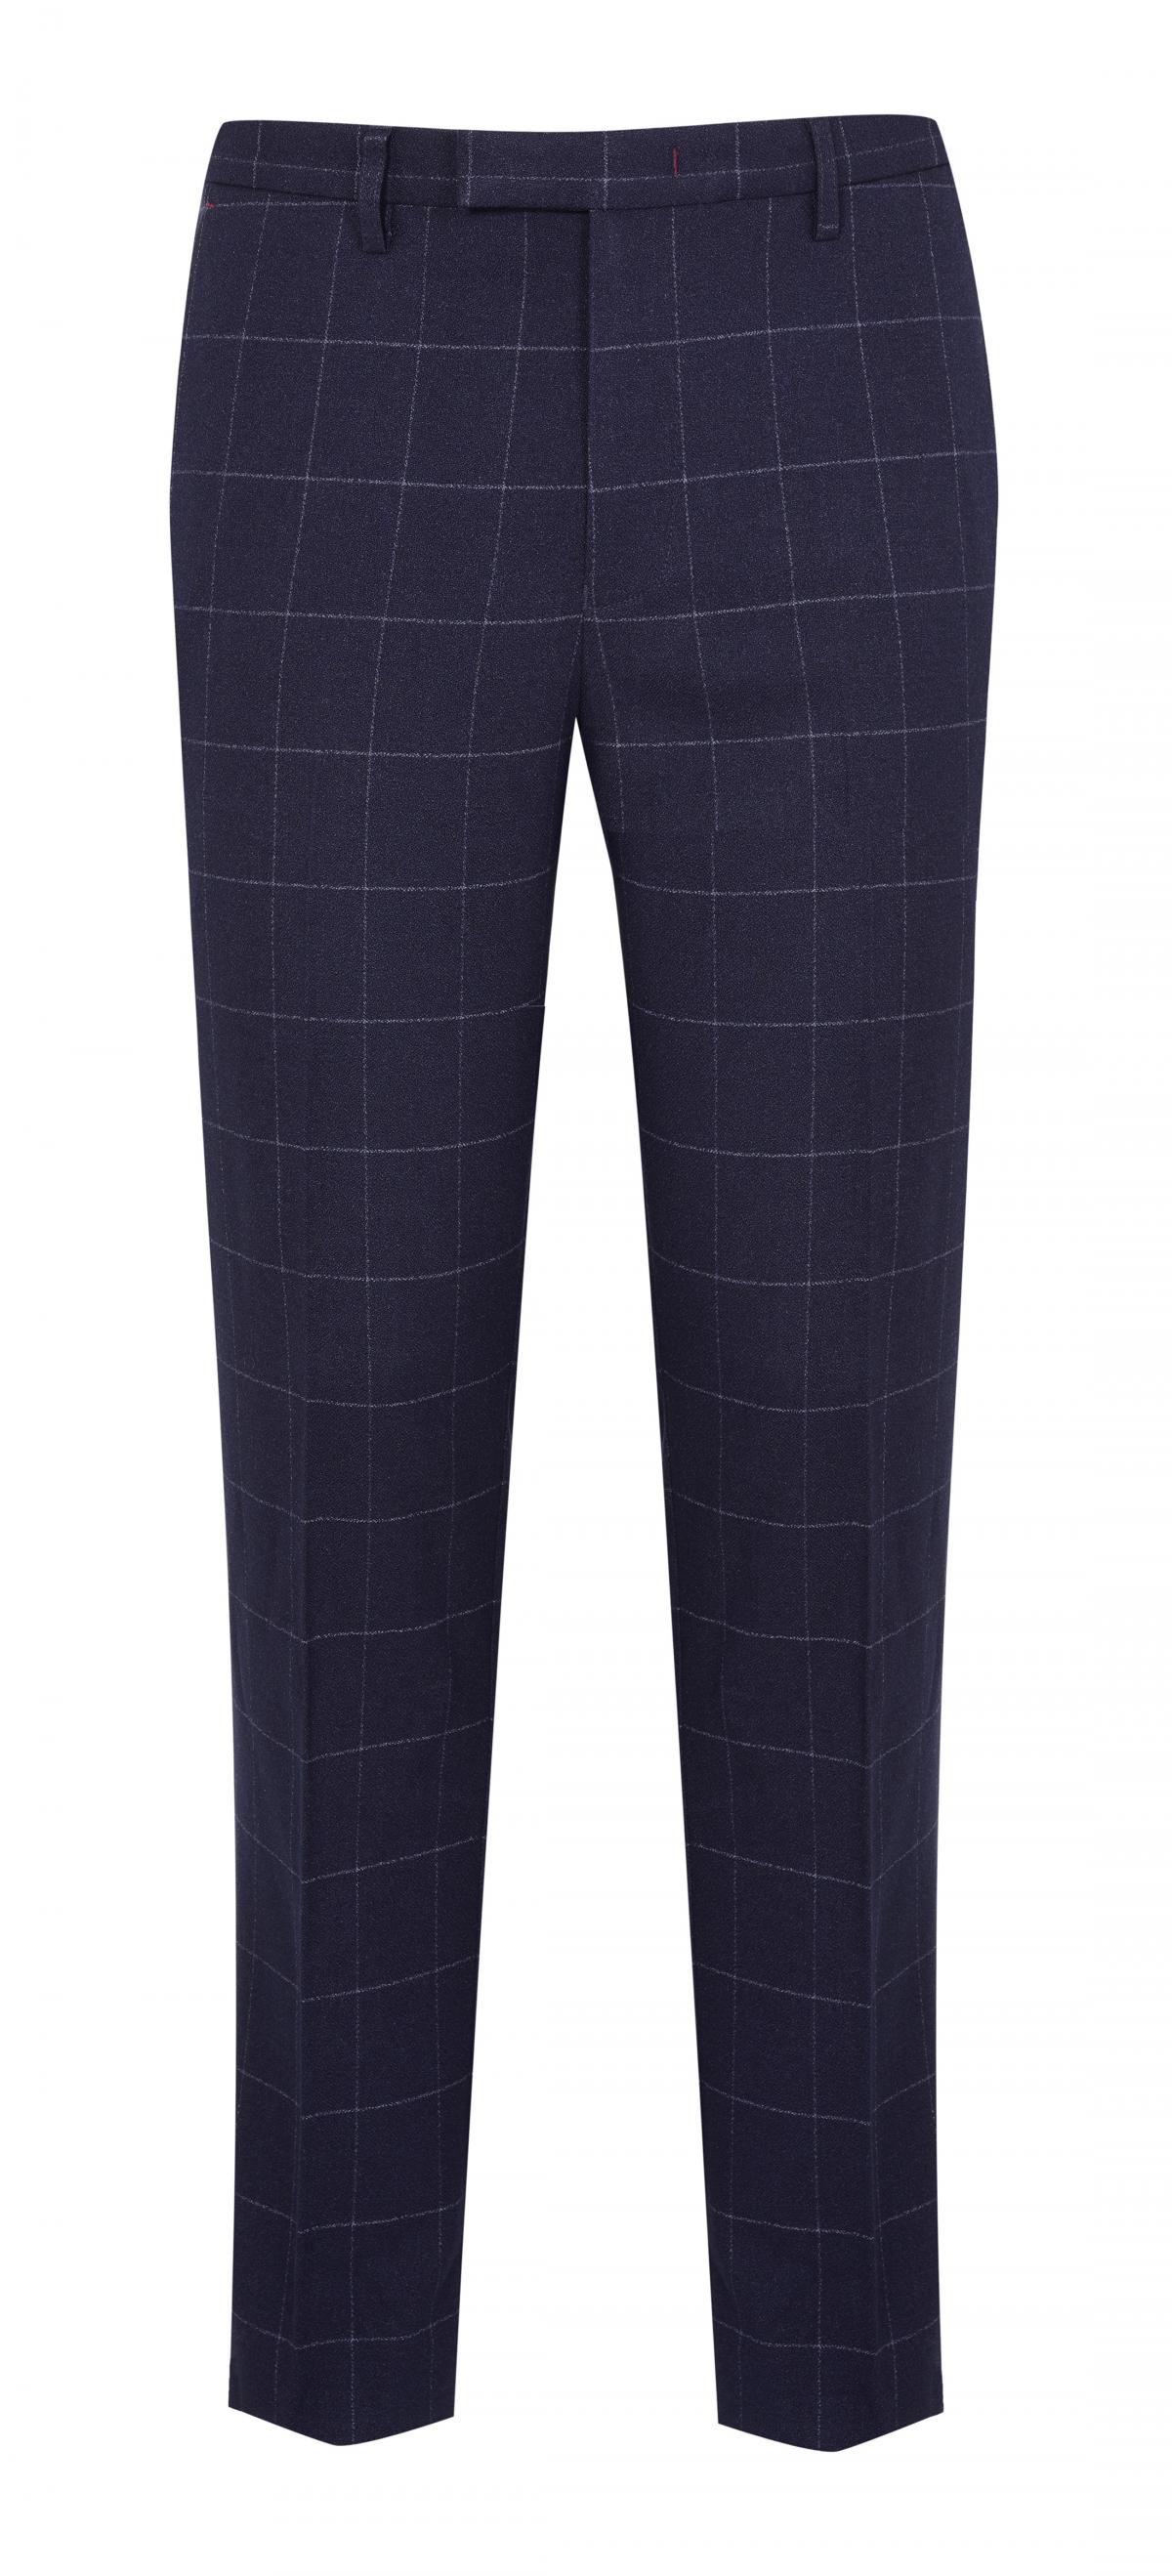 Burton Menswear London, Checked Textured Trousers, £35